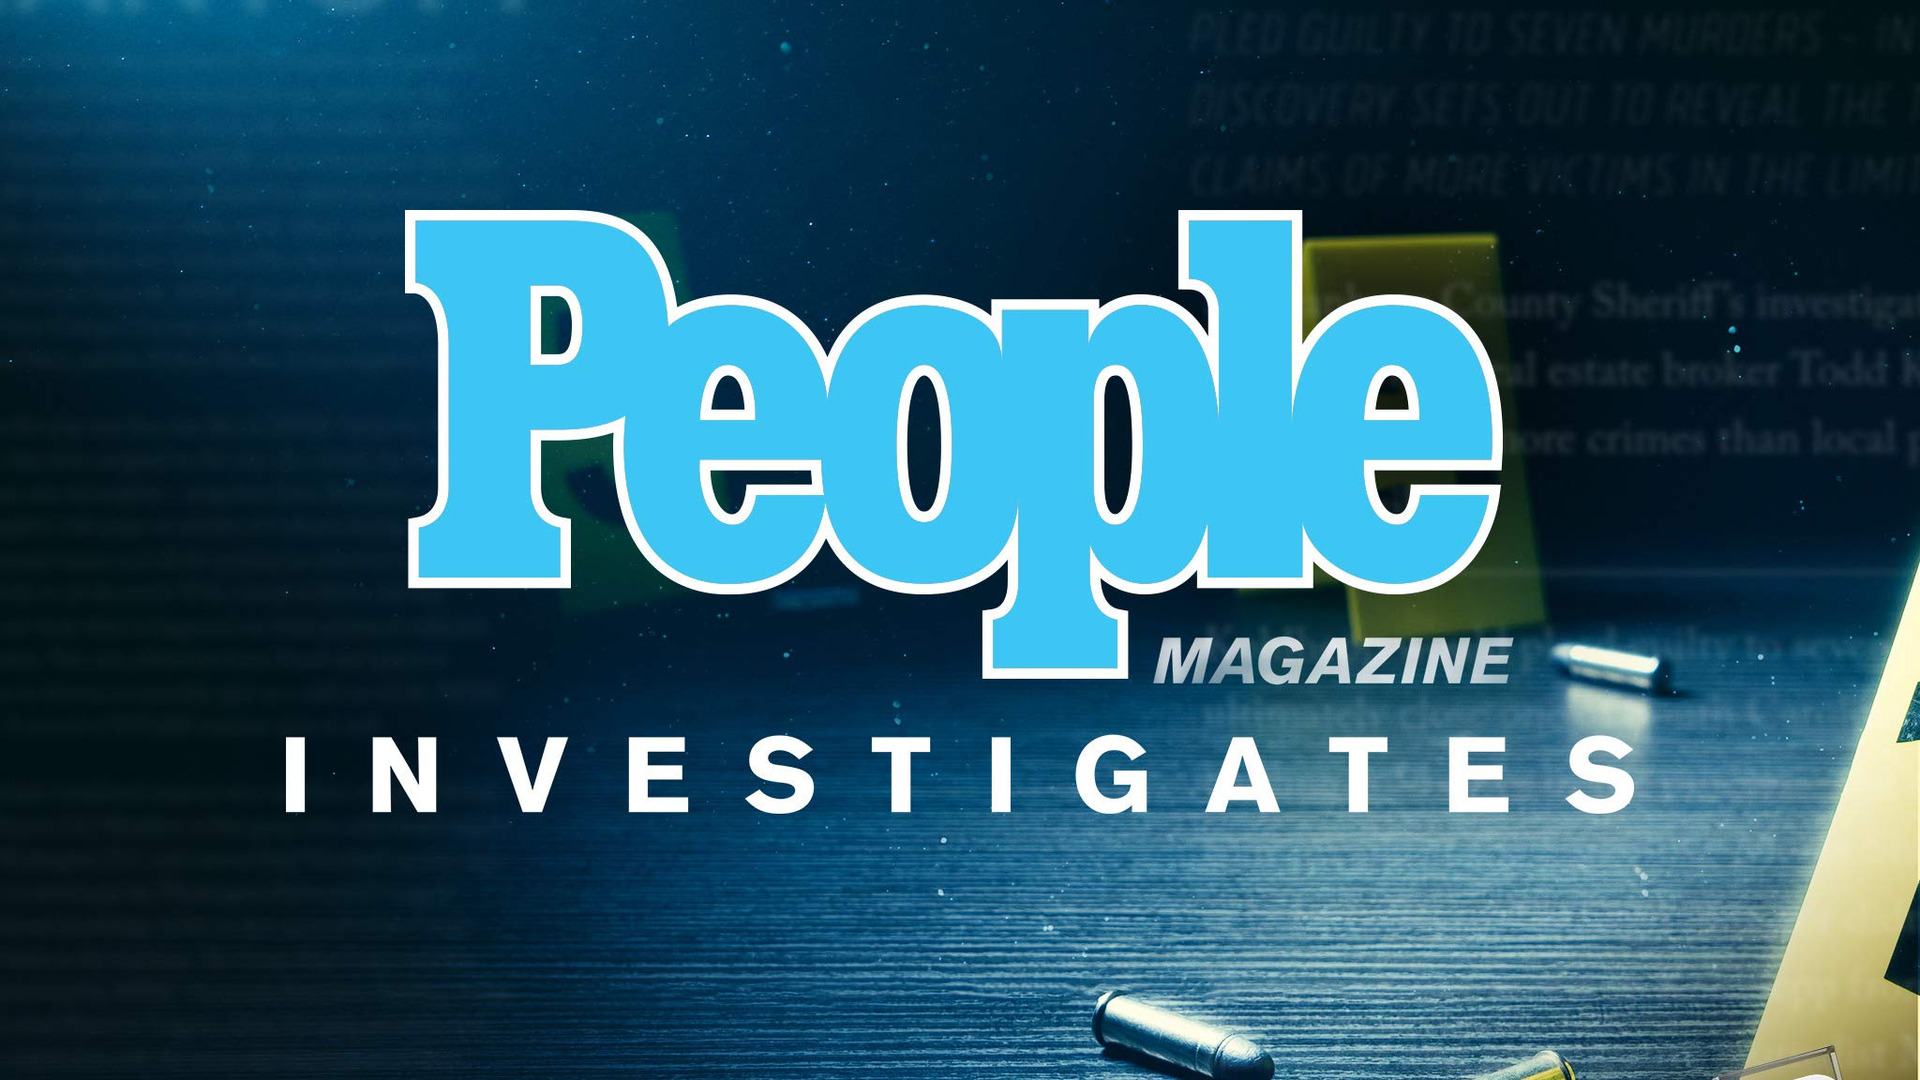 Show People Magazine Investigates